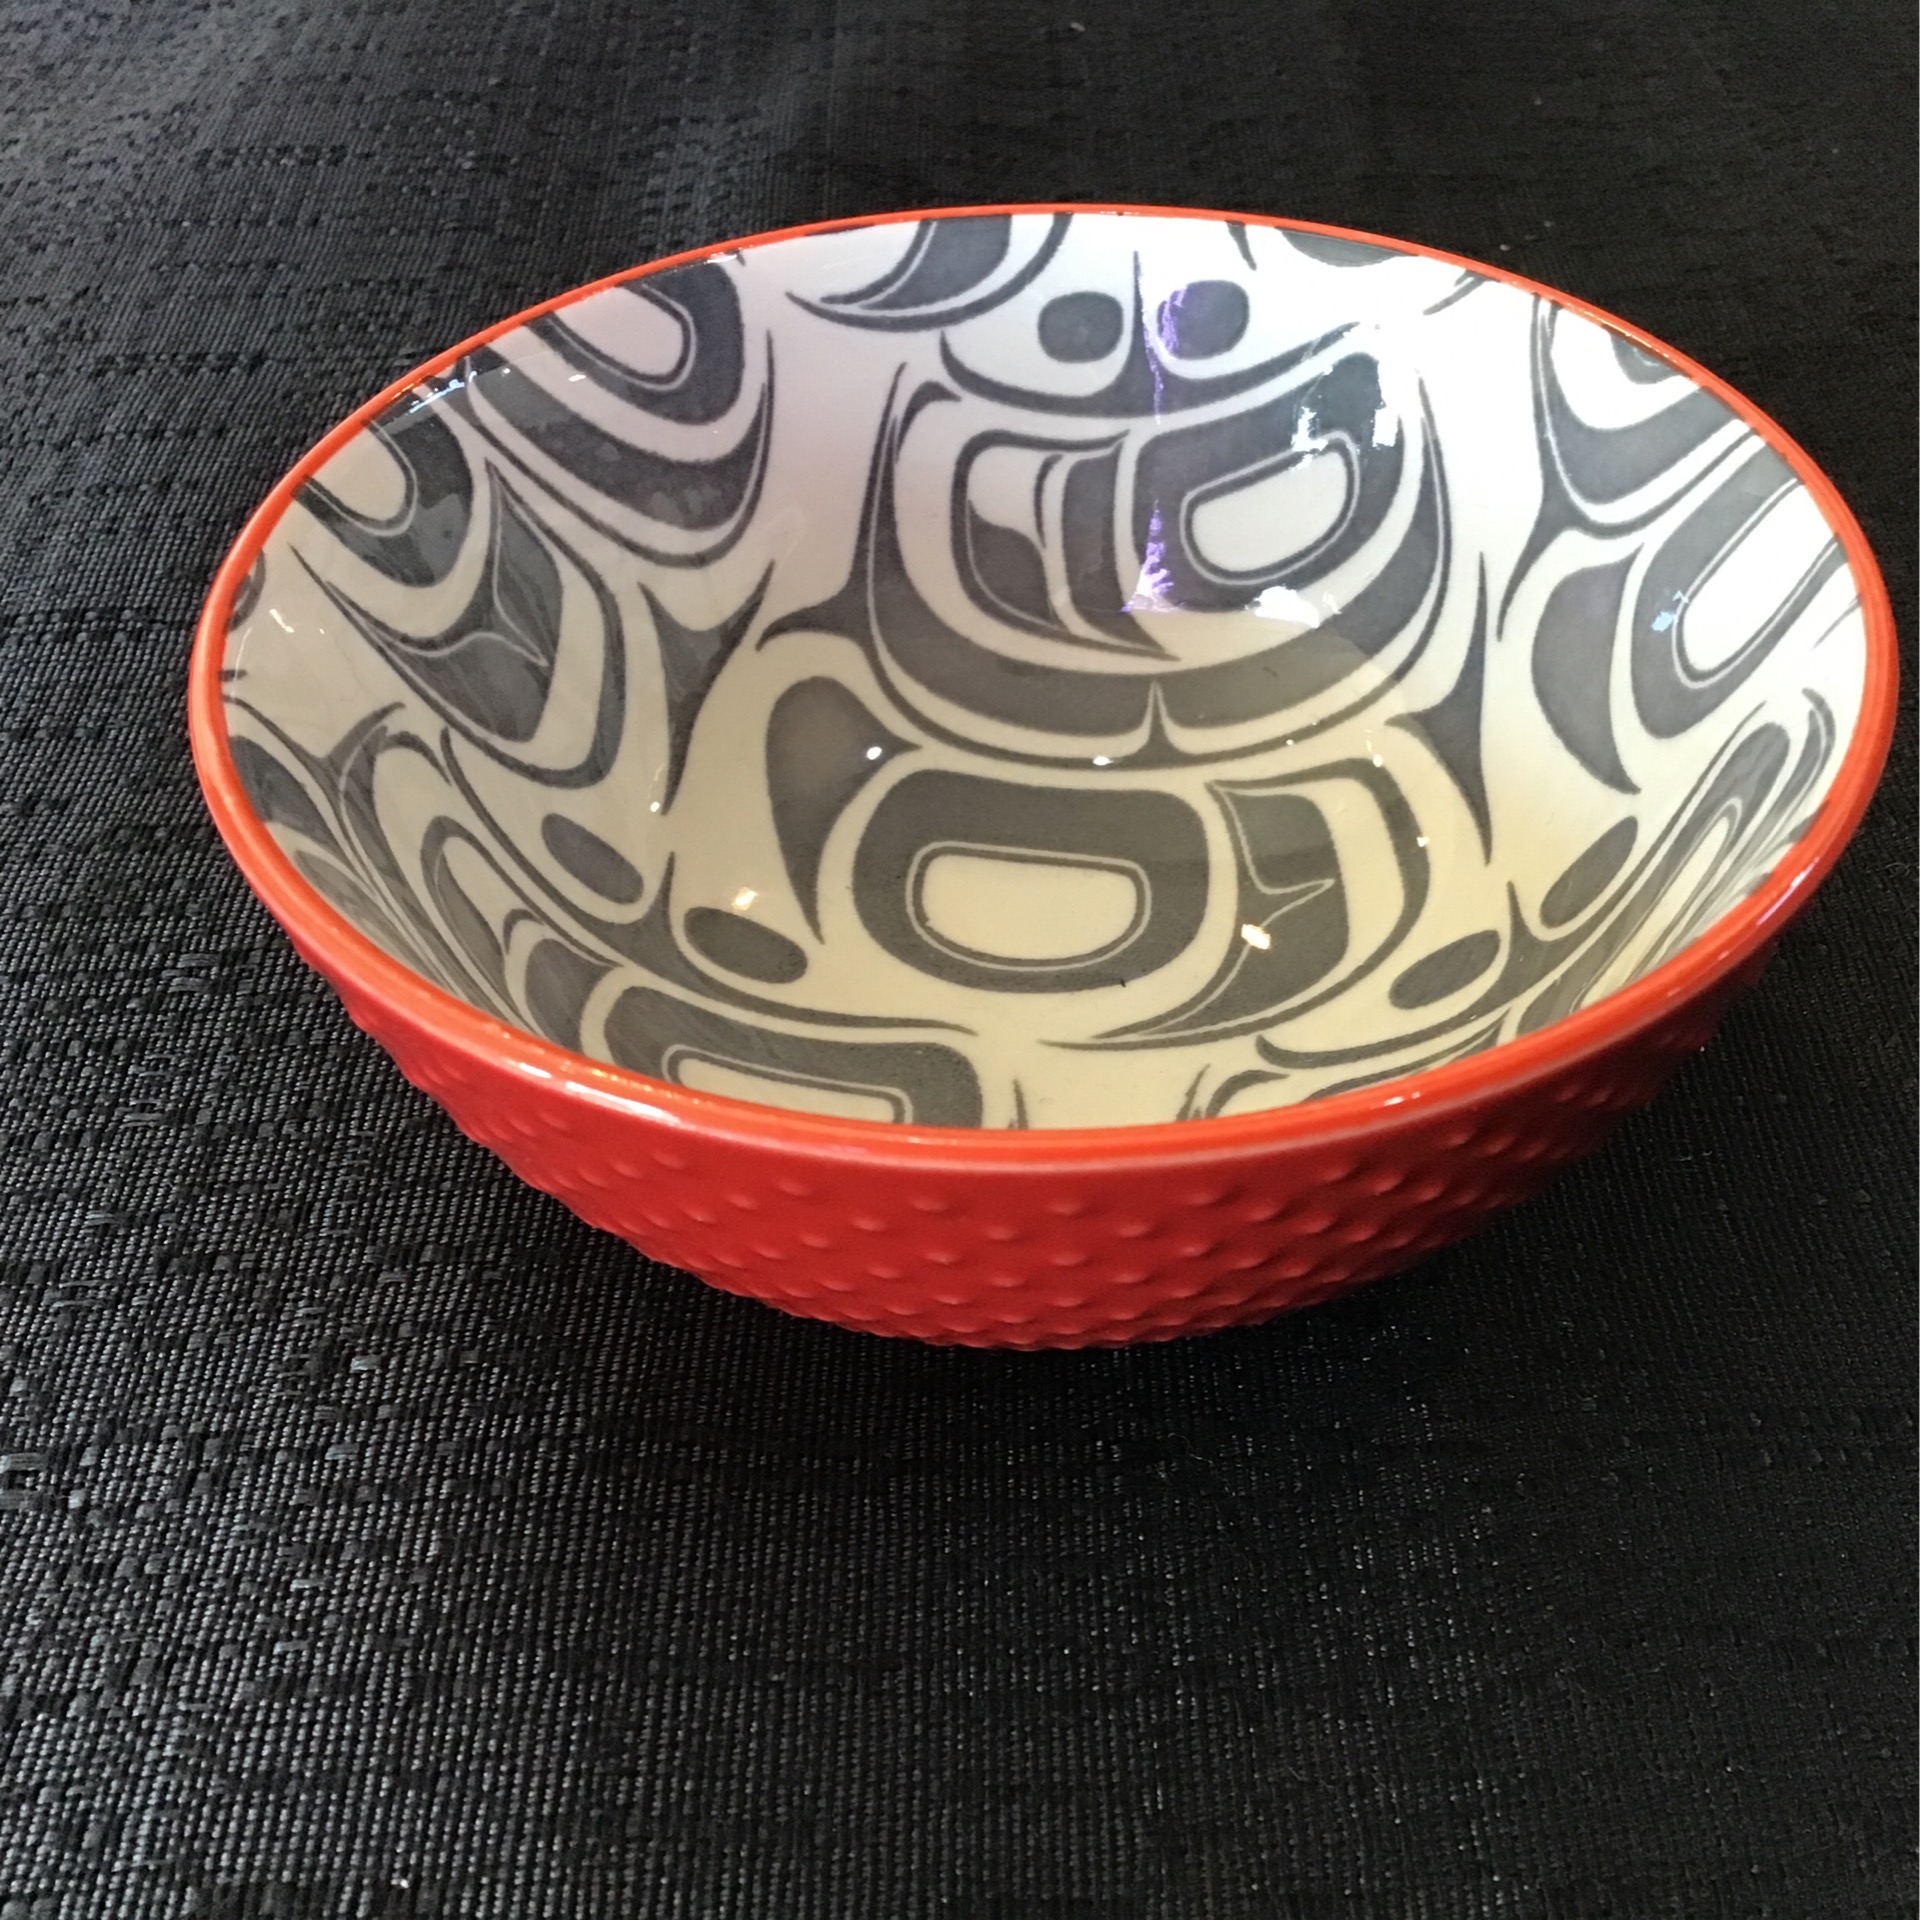 Porcelain Art Bowl transforming Eagle